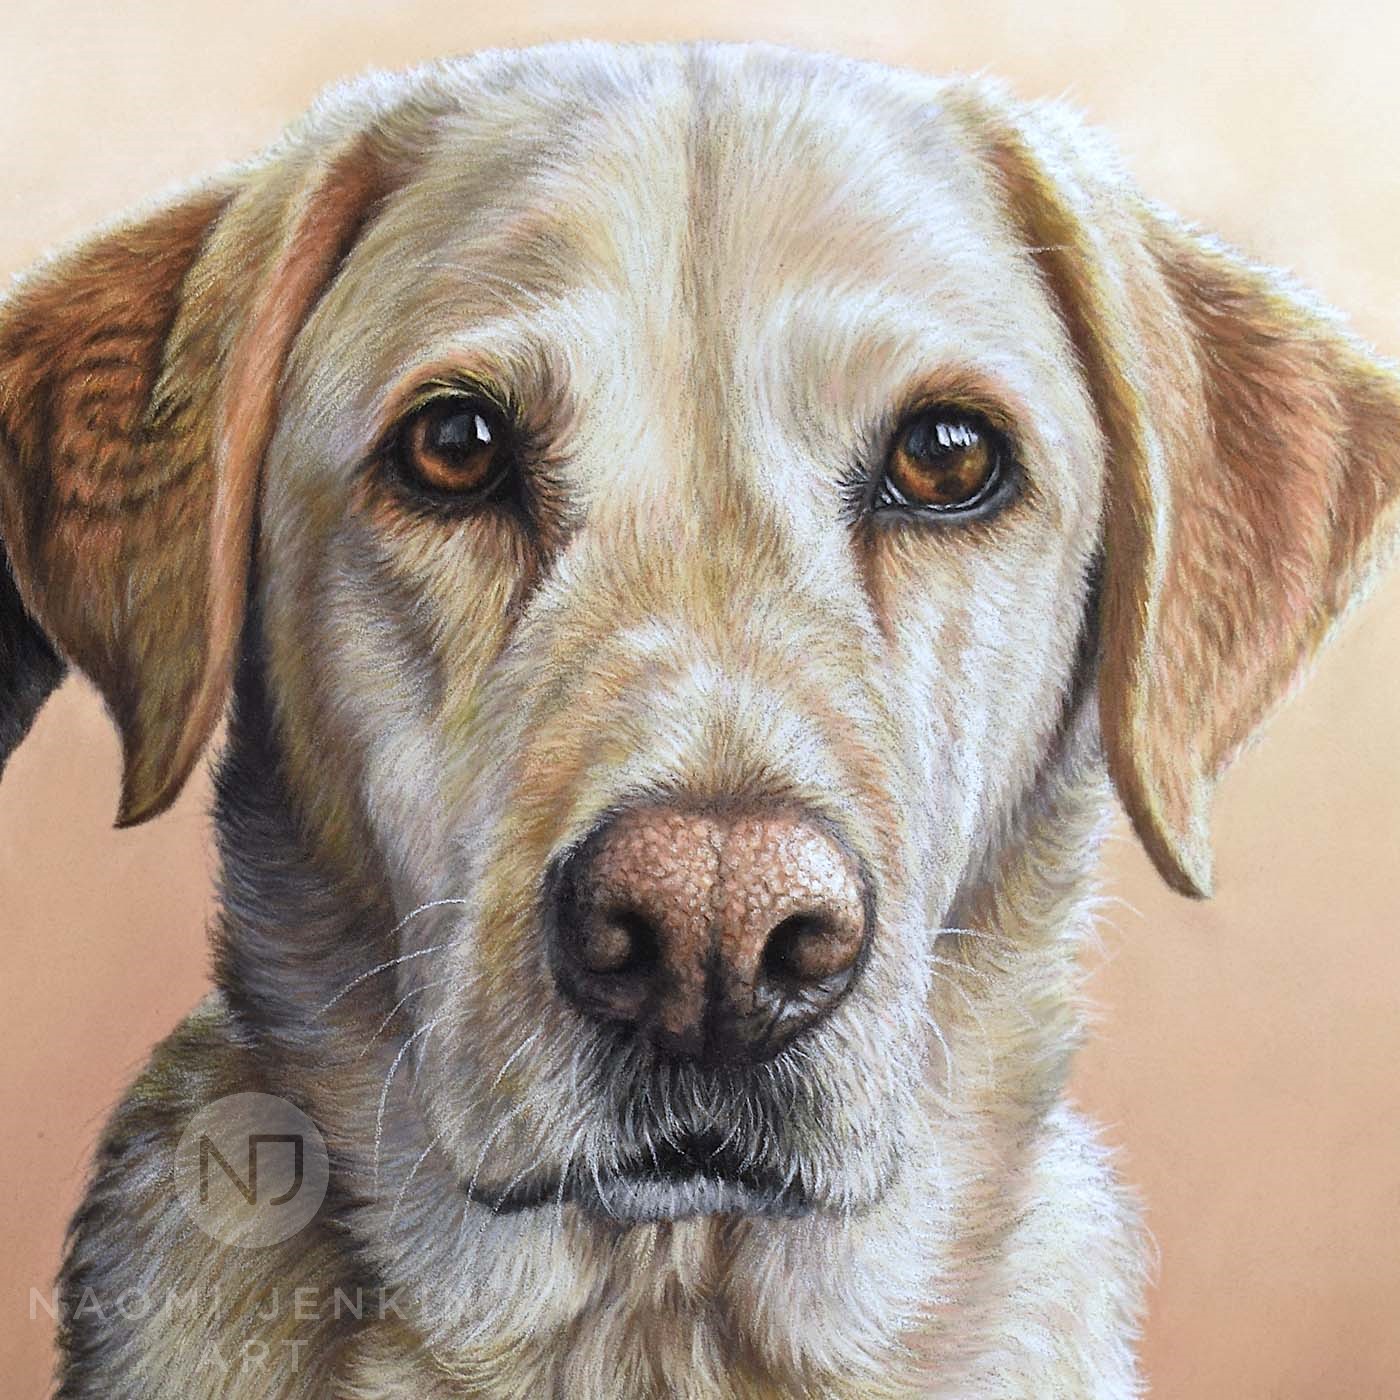 Portrait of golden Labrador by Naomi Jenkin Art